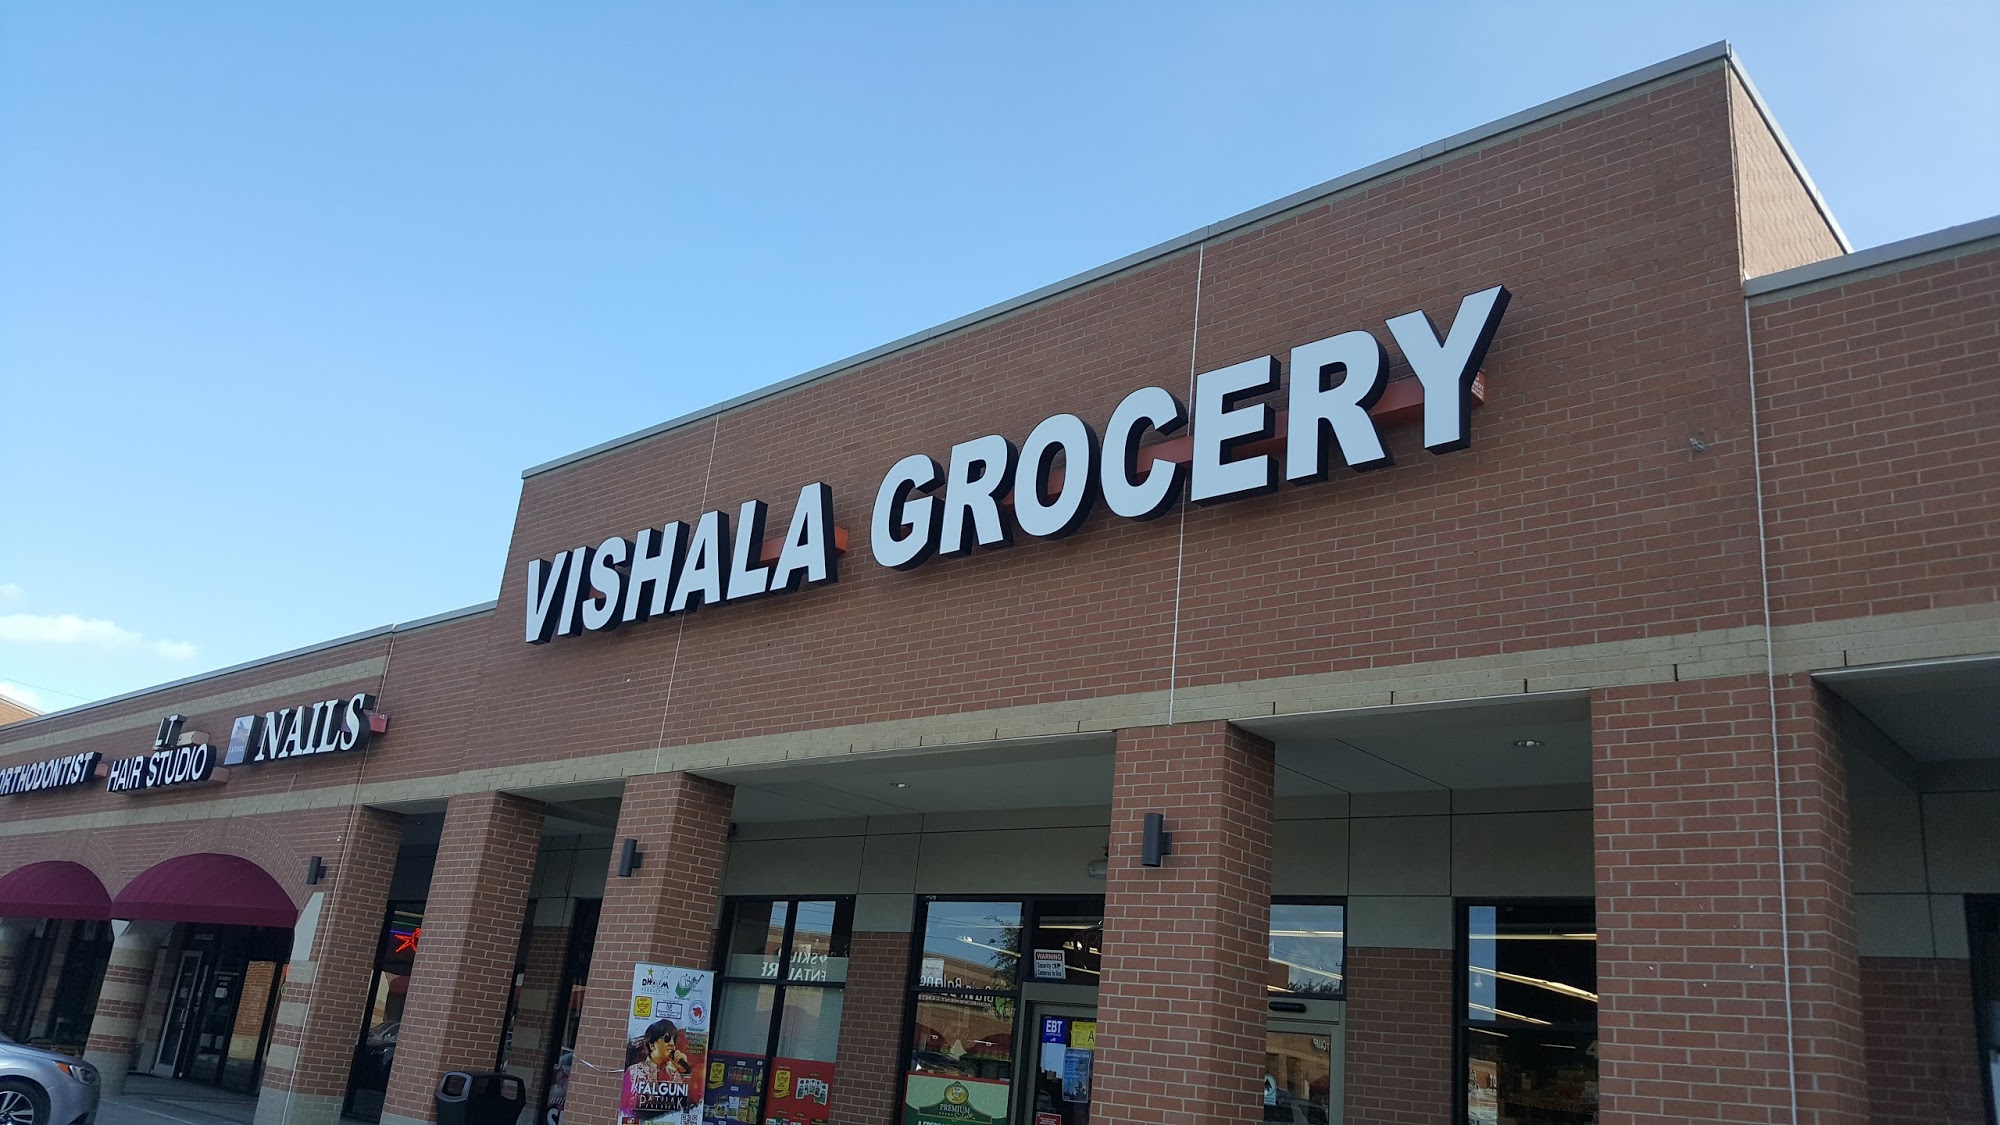 Vishala Grocery